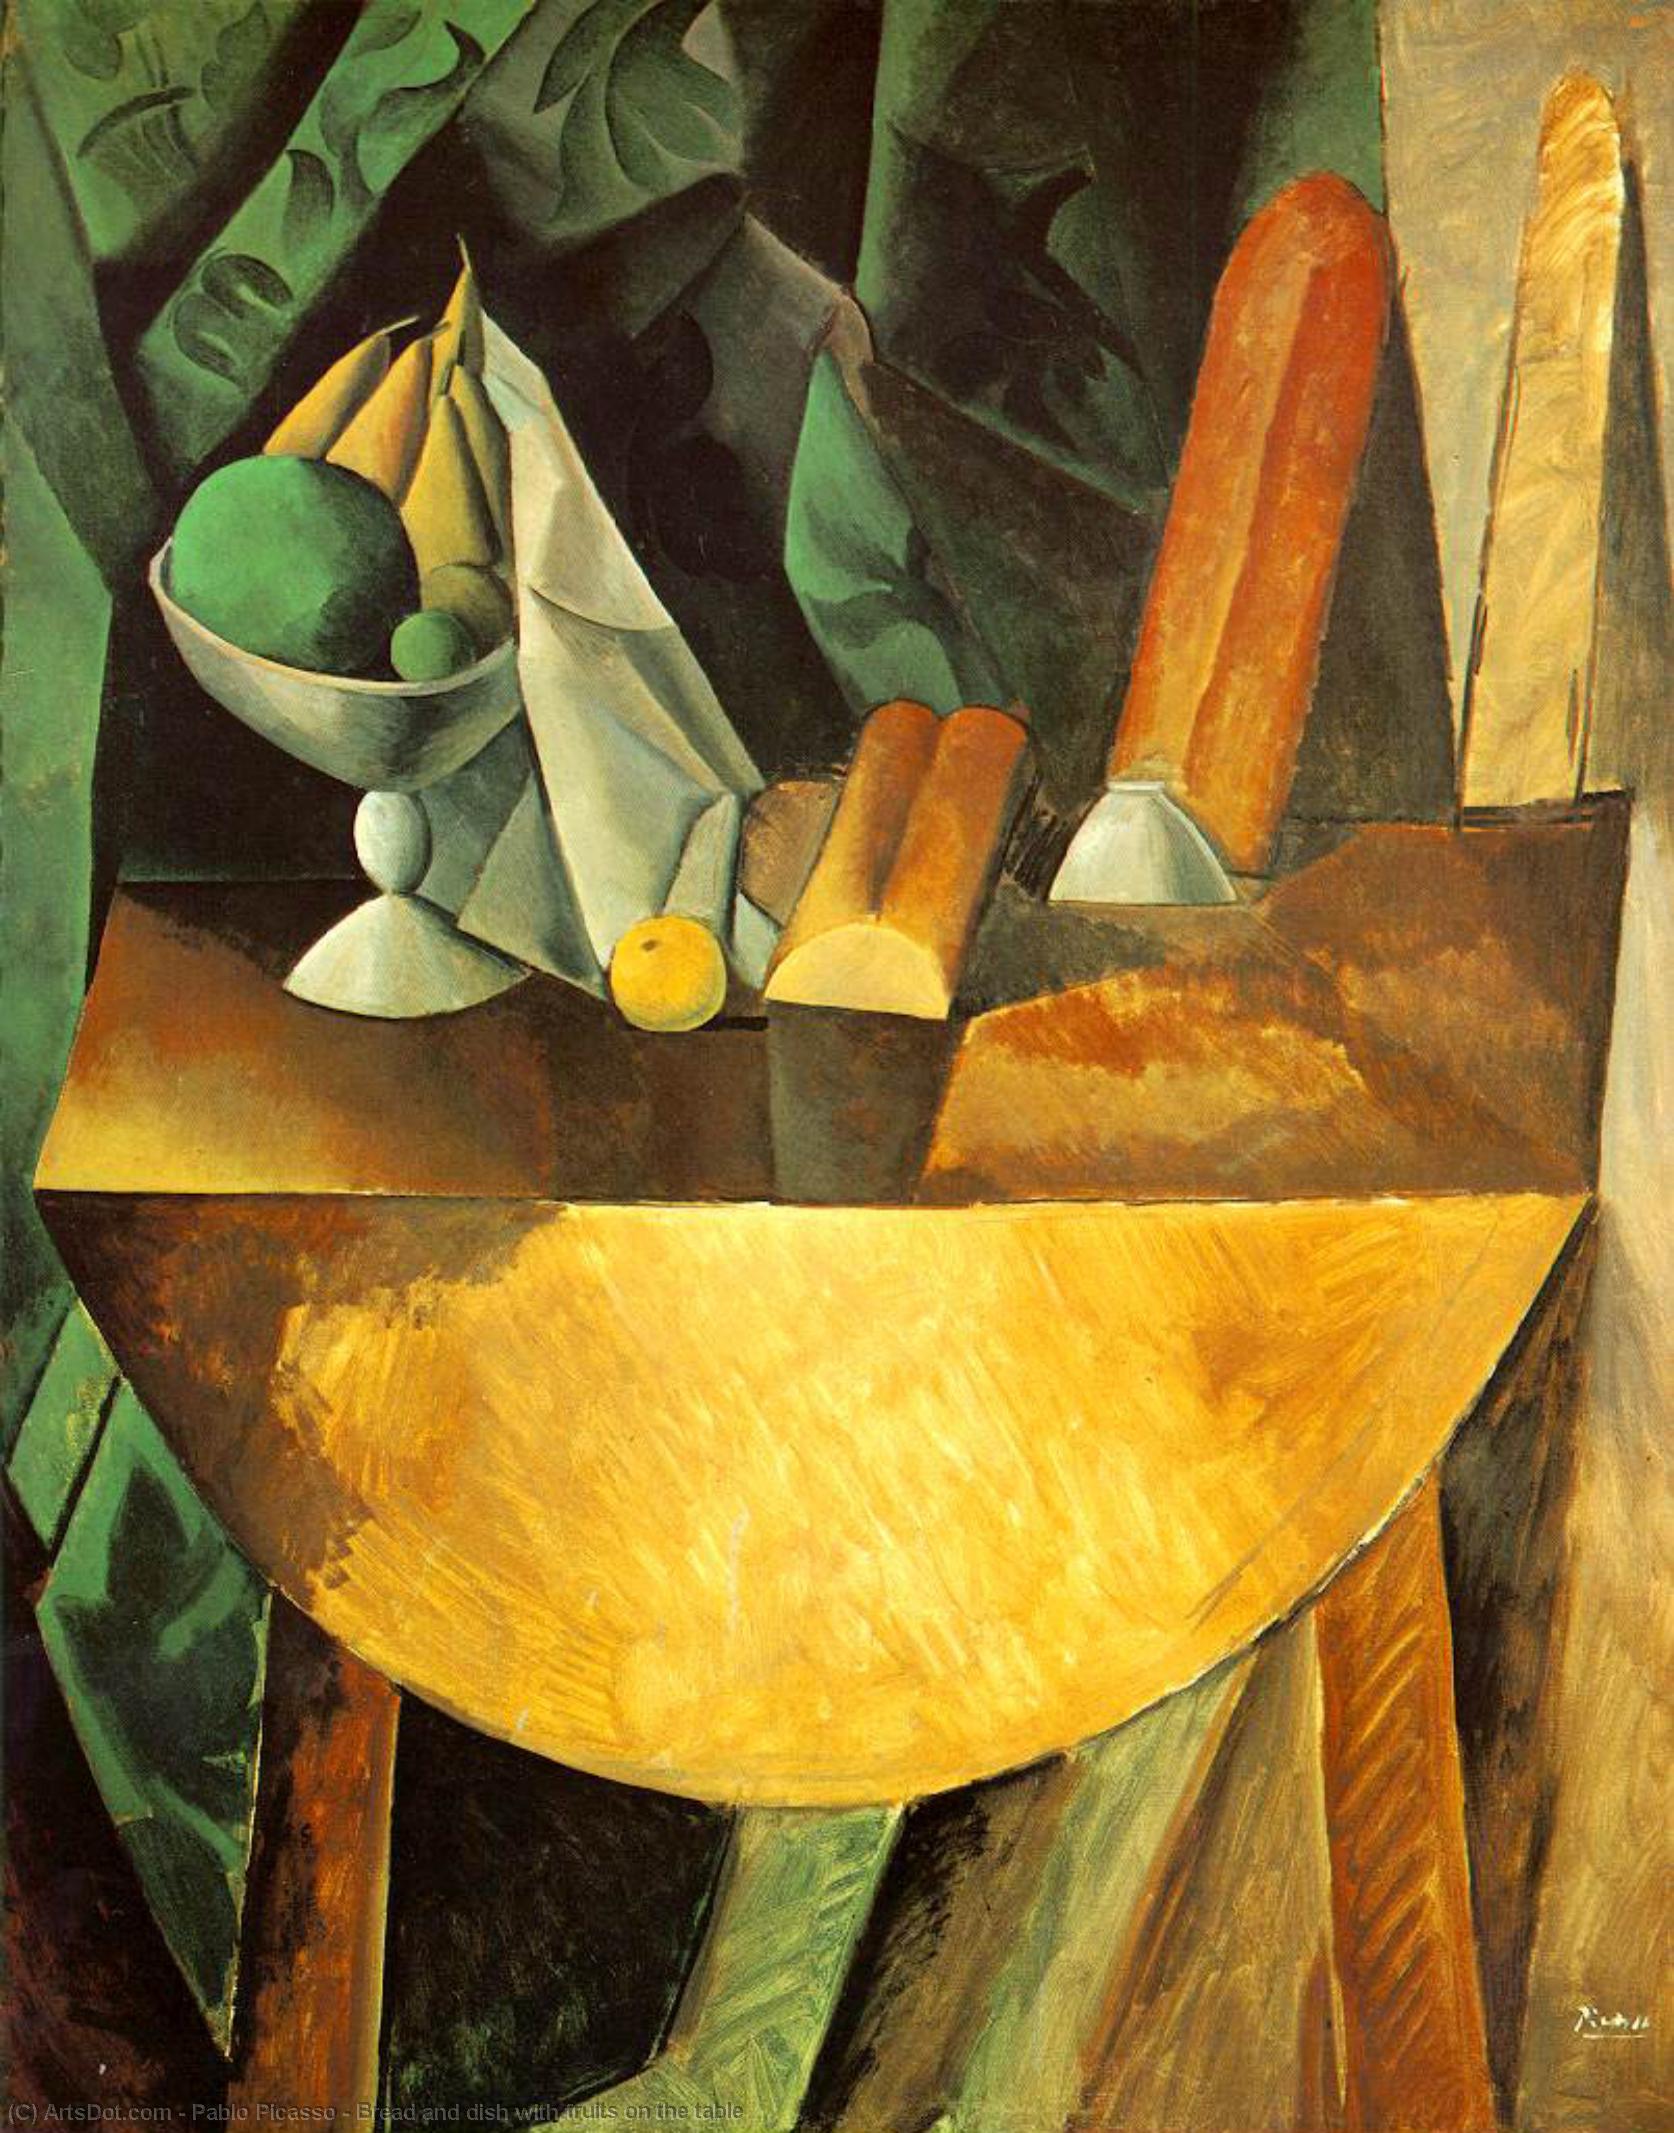 WikiOO.org - אנציקלופדיה לאמנויות יפות - ציור, יצירות אמנות Pablo Picasso - Bread and dish with fruits on the table